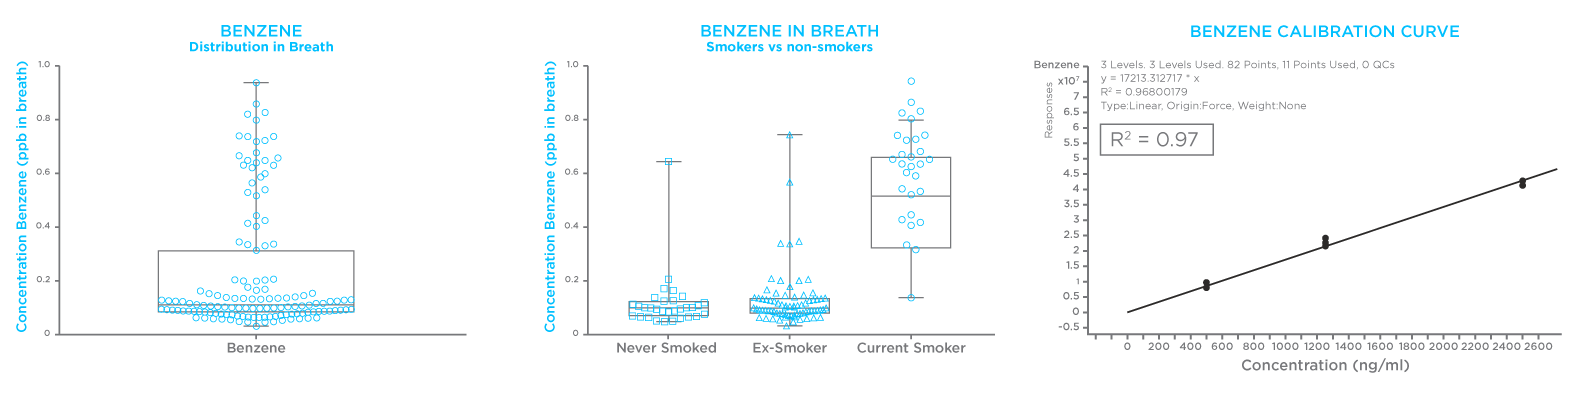 Benzene in Breath